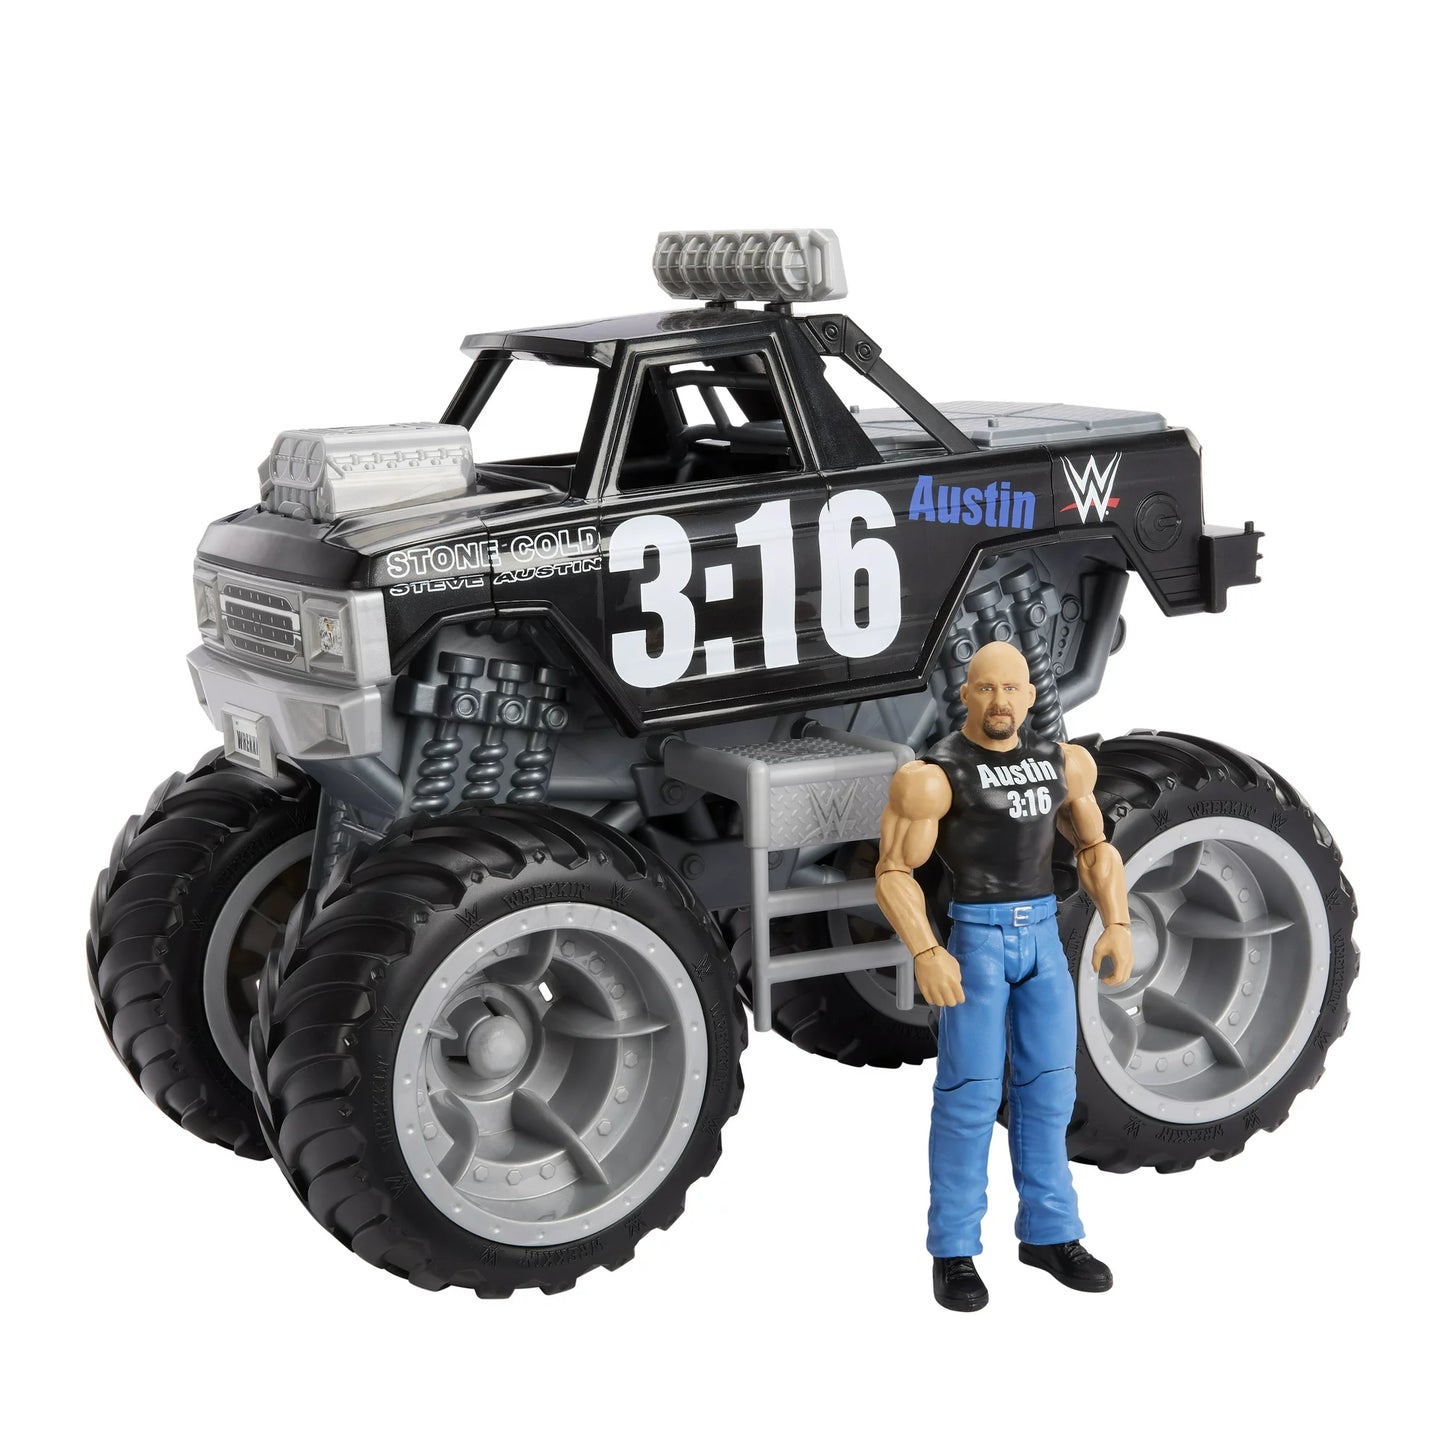 2023 WWE Mattel Wrekkin' Stone Cold Crusher Monster Truck